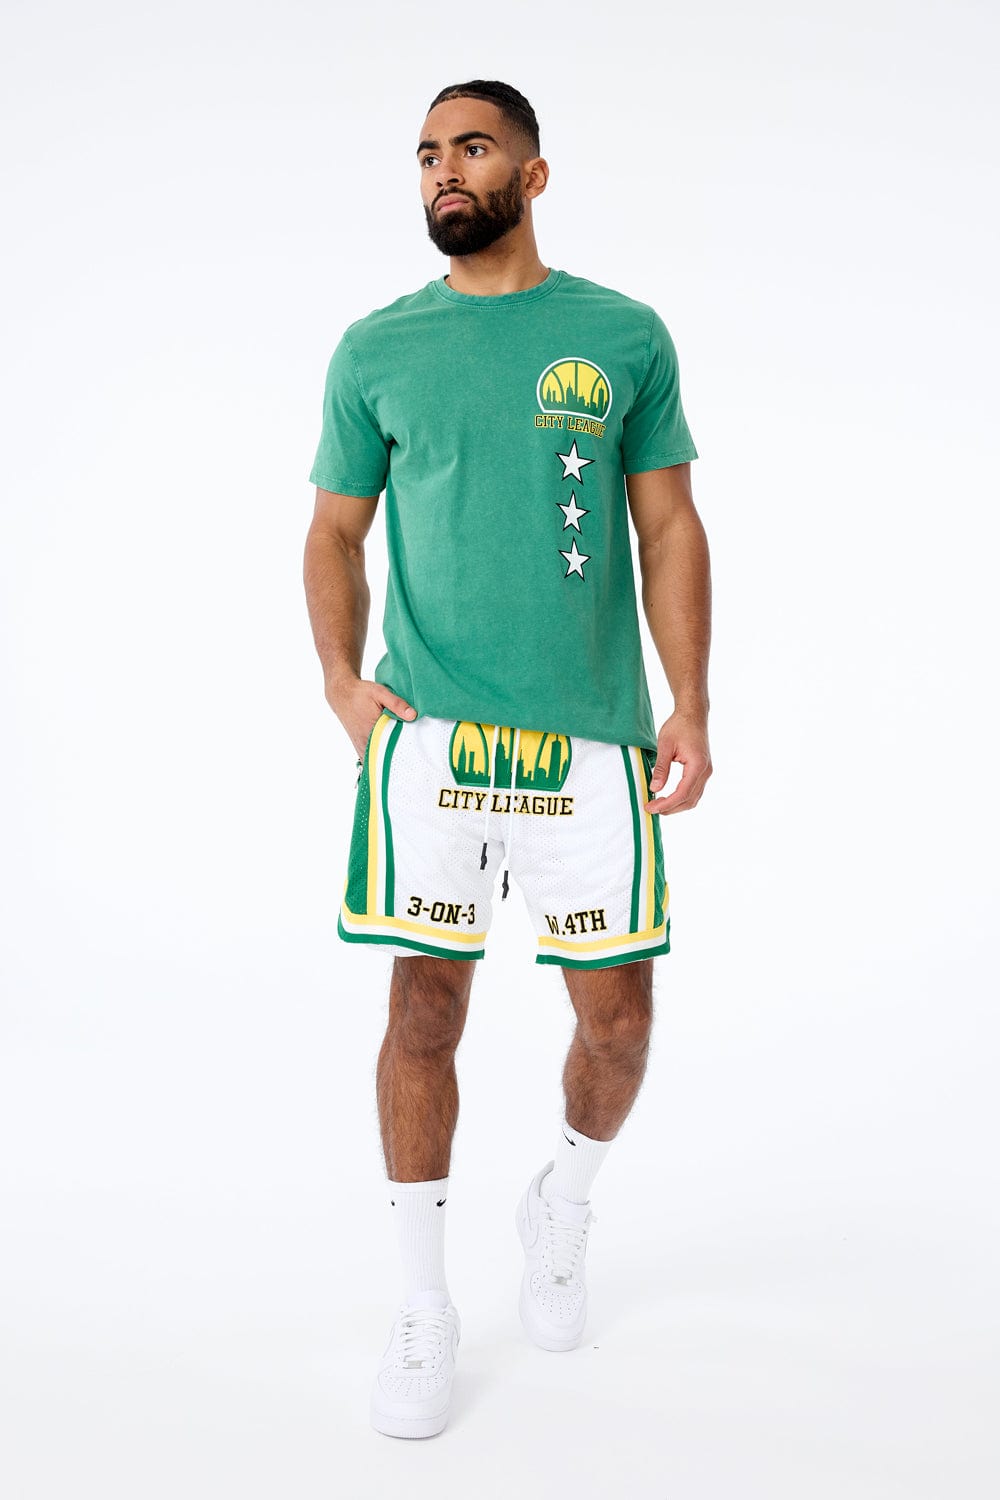 Jordan Craig Retro - Emerald City Basketball Shorts (League Green)